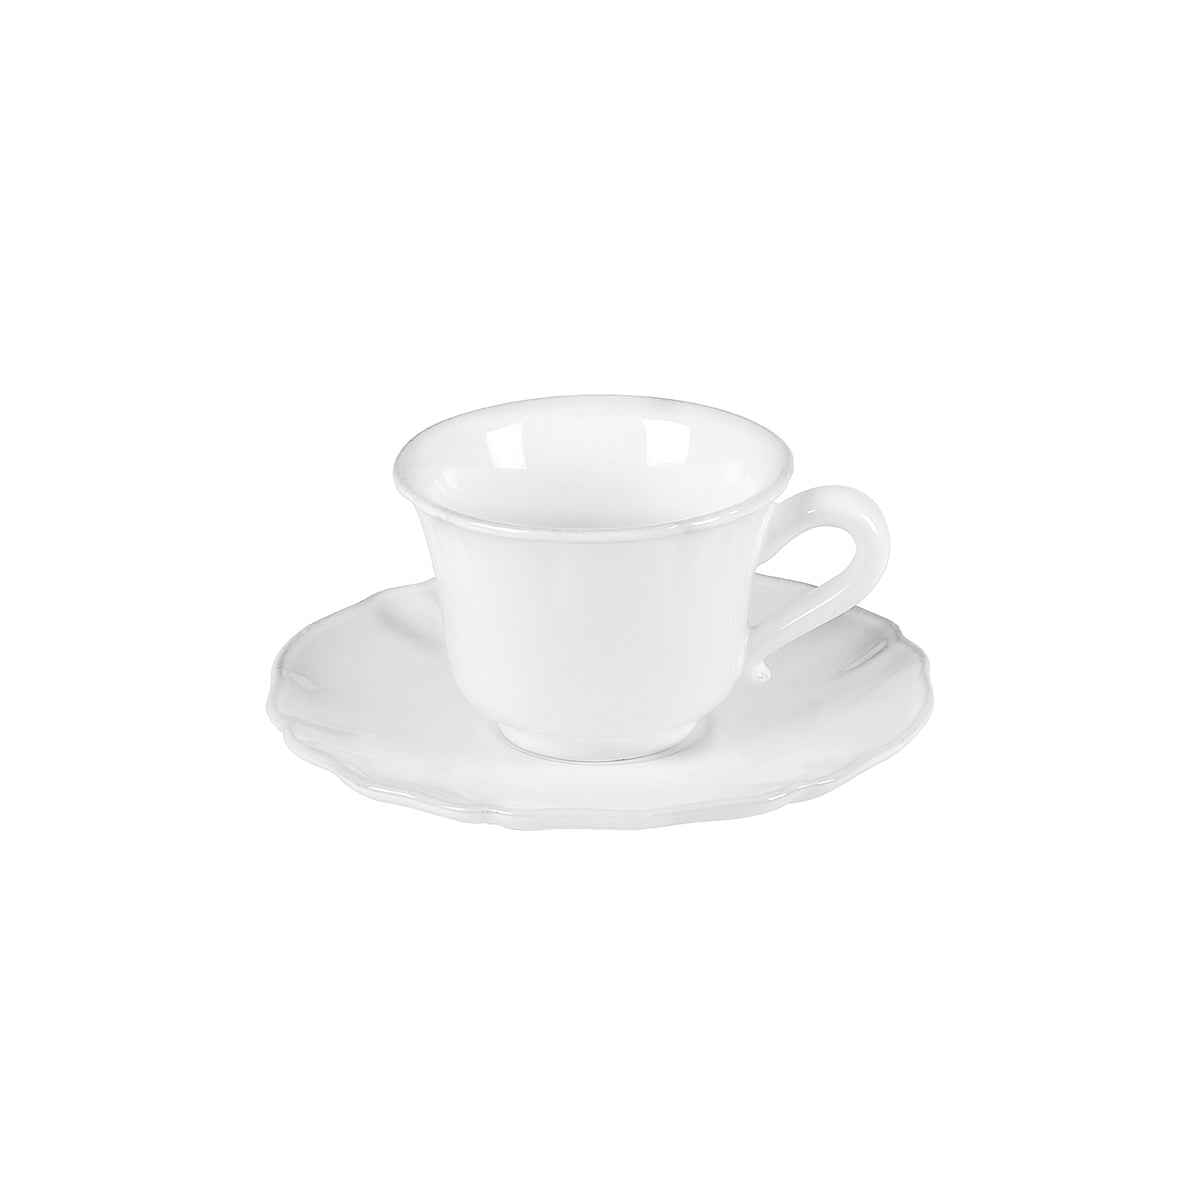 300010 Costa Nova Alentejo White Coffee Cup & Saucer Set 90ml Tomkin Australia Hospitality Supplies